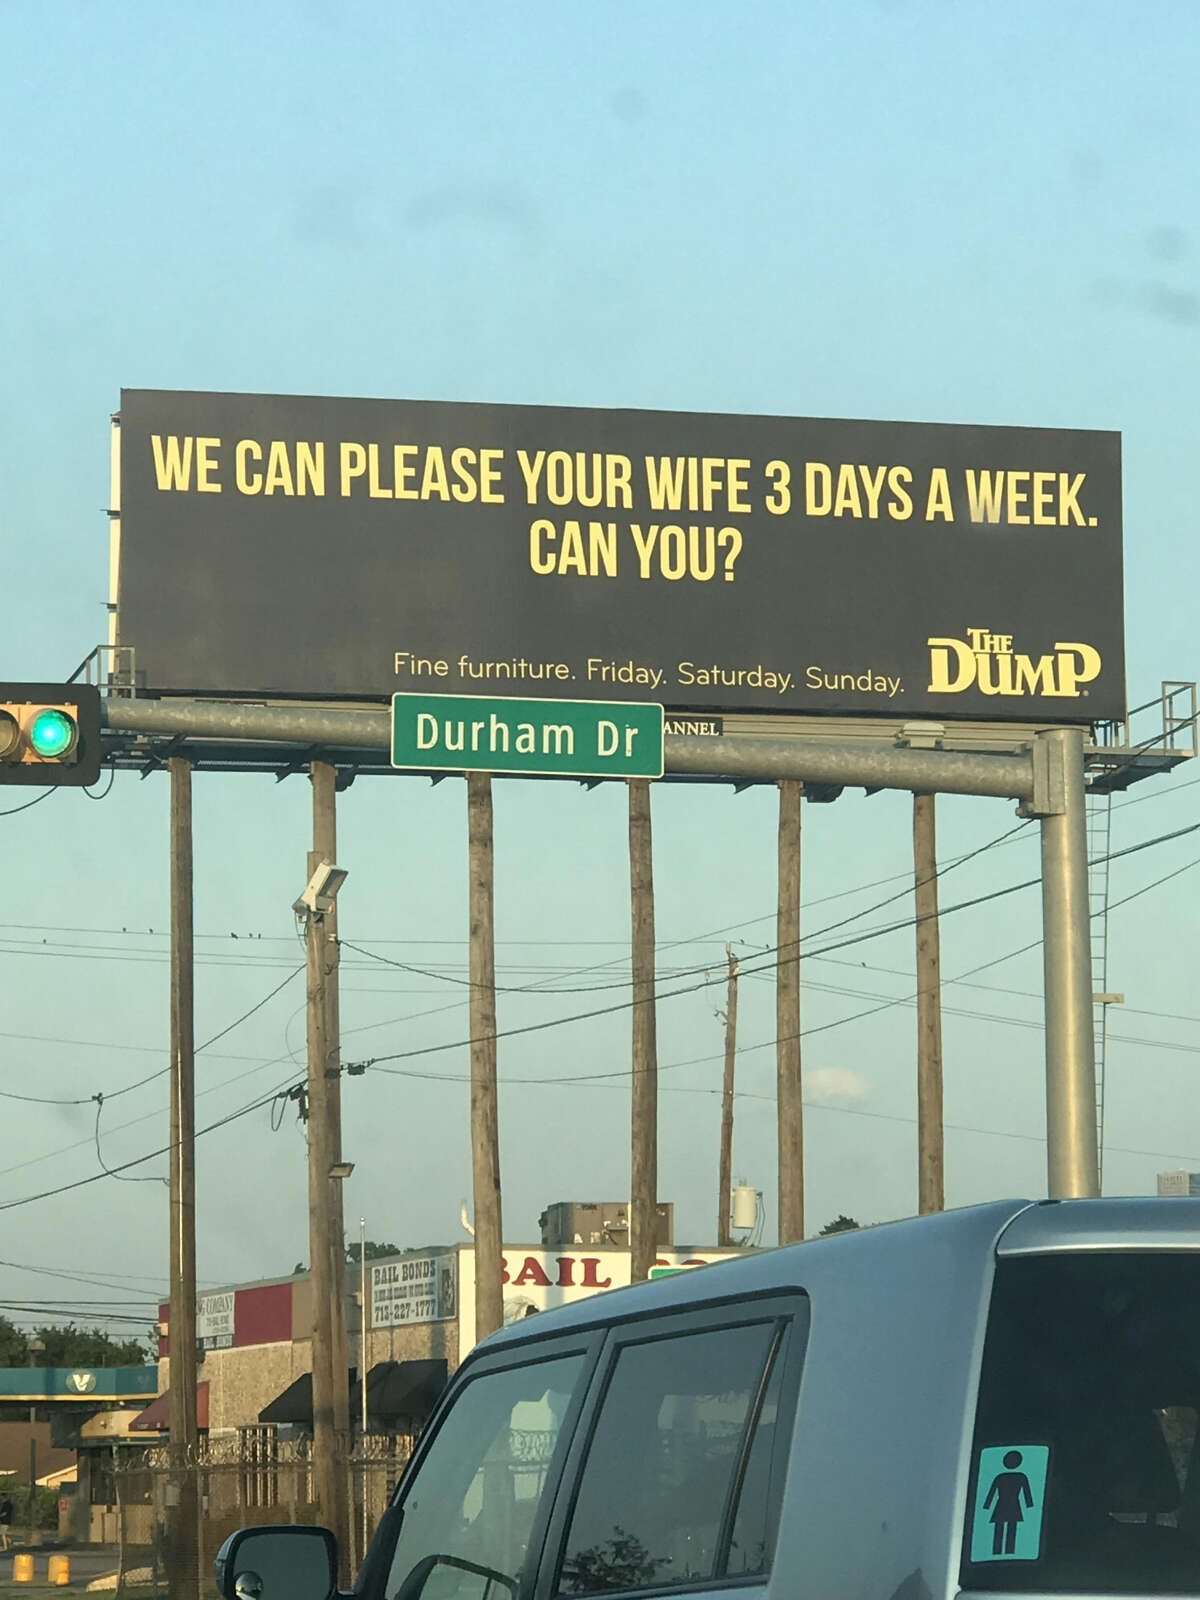 Houston furniture store's suggestive billboard causes stir on social media